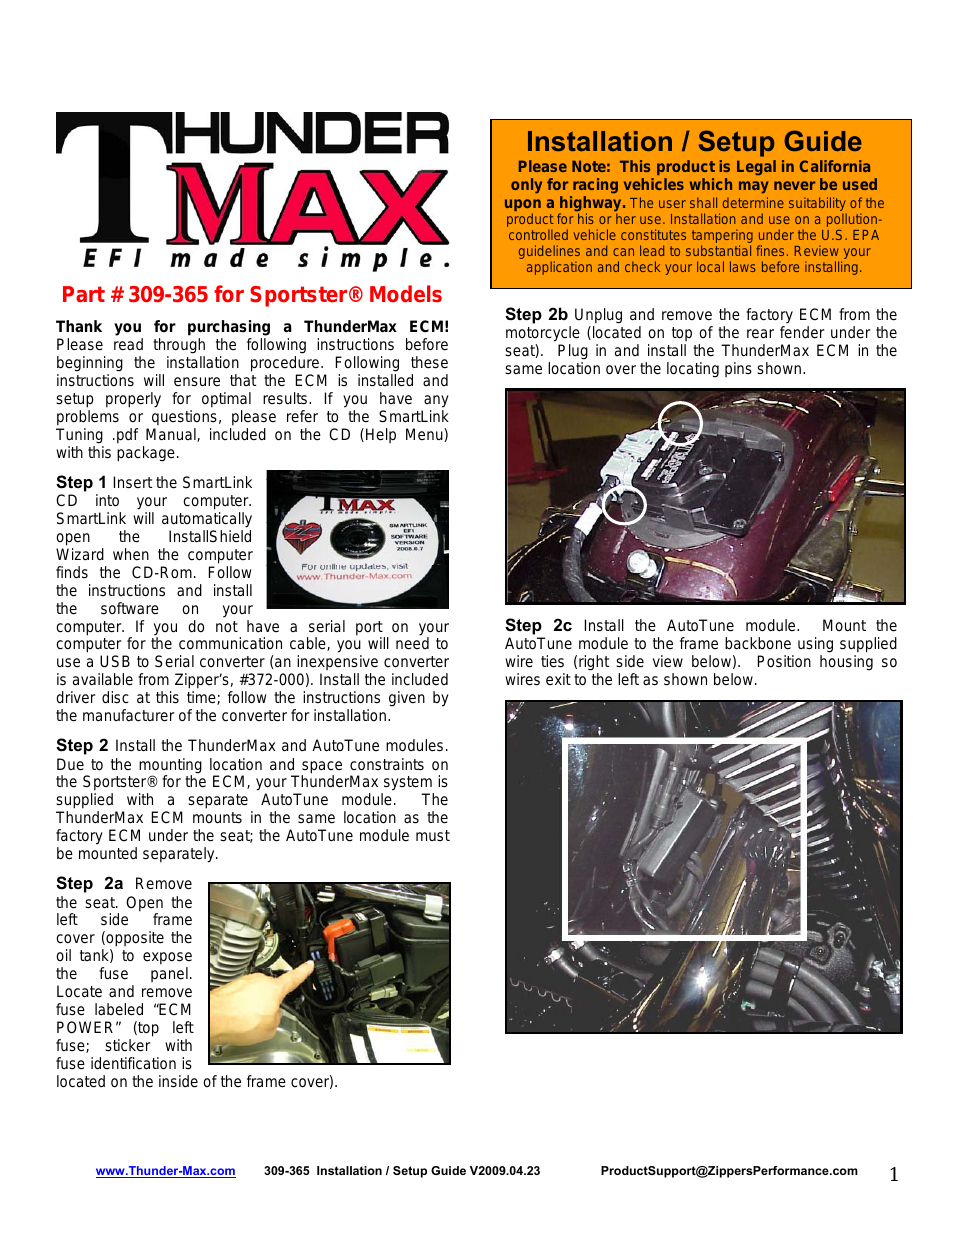 Thunder-Max 309-365